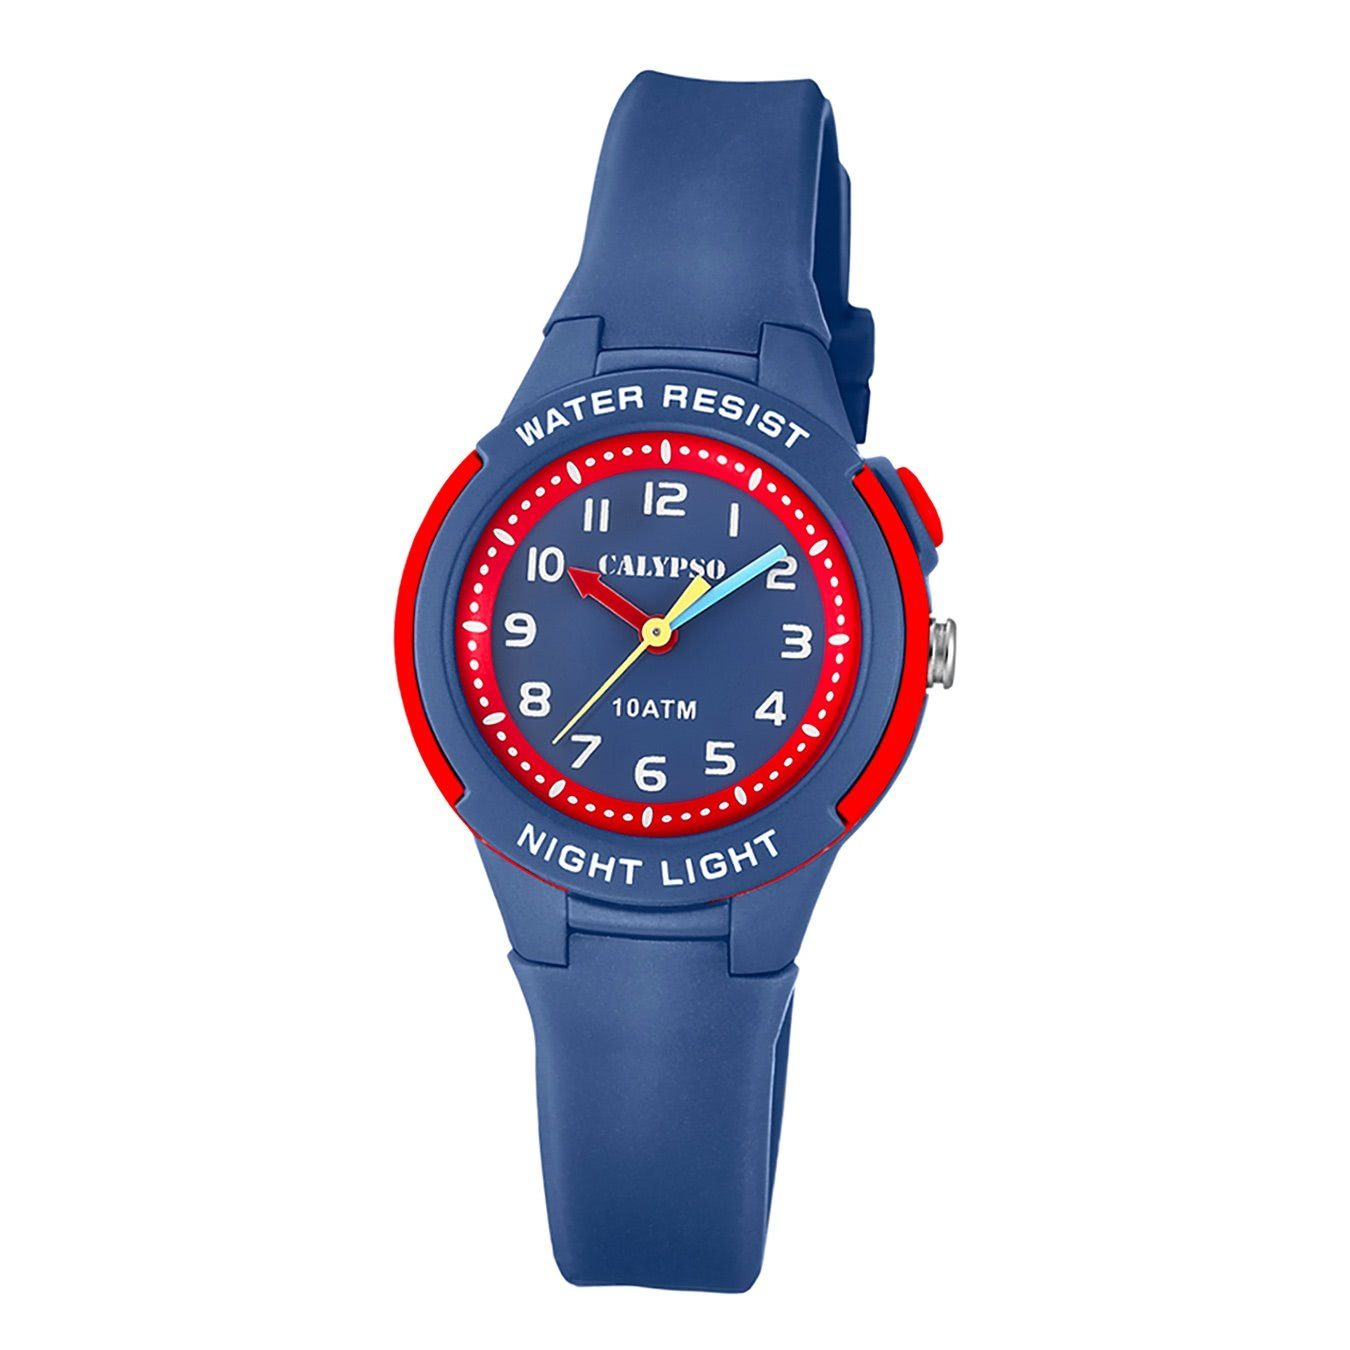 Kunststoff, Kinder WATCHES Uhr rund, CALYPSO dunkelblau, Calypso PURarmband Fashion K6069/5, Armbanduhr Kinder Quarzuhr